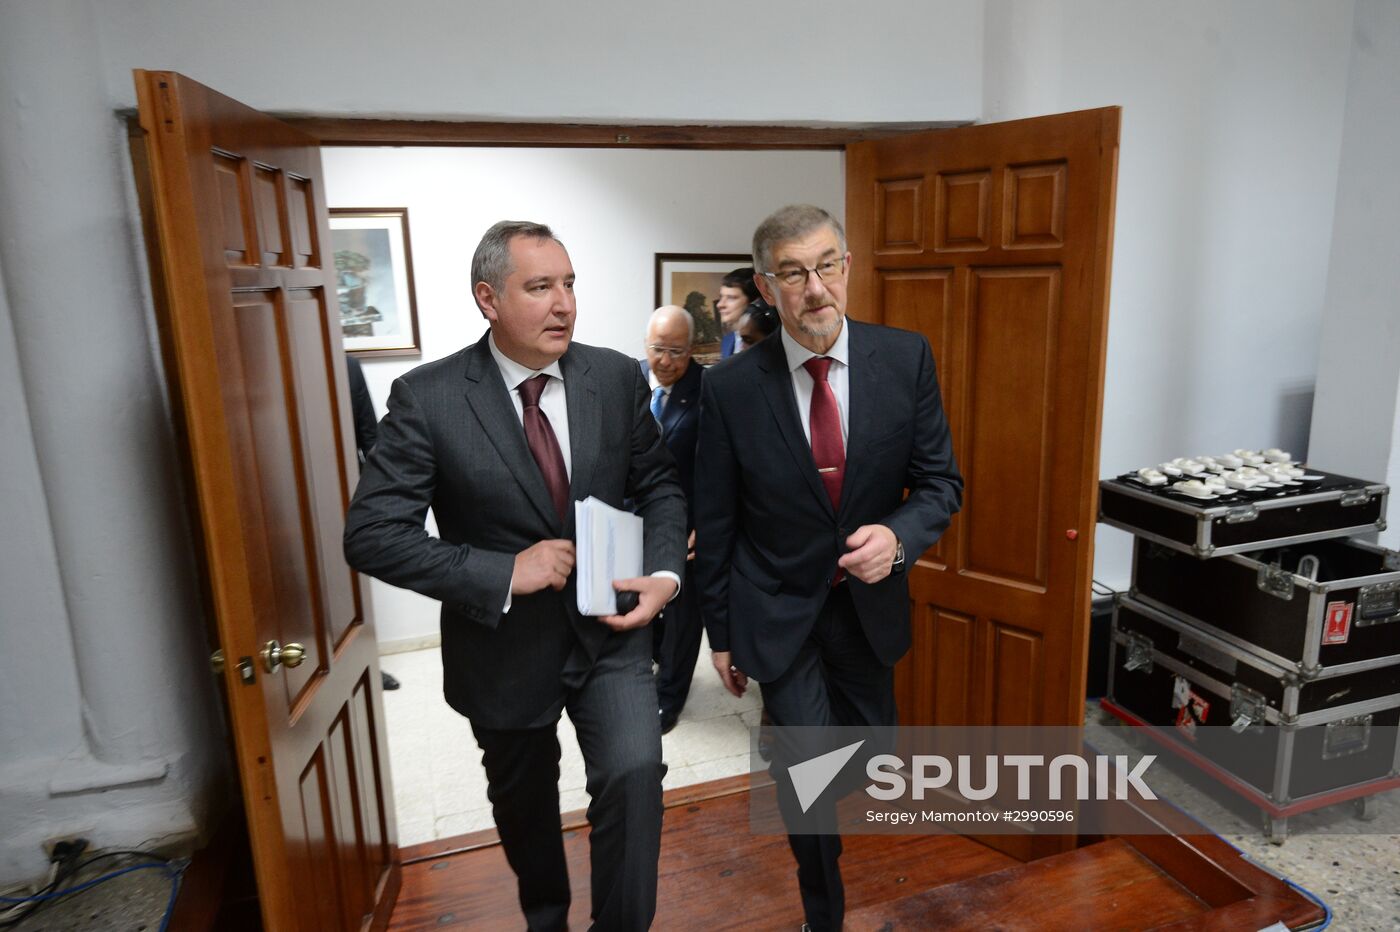 Deputy Prime Minister Dmitry Rogozin's visit to Cuba